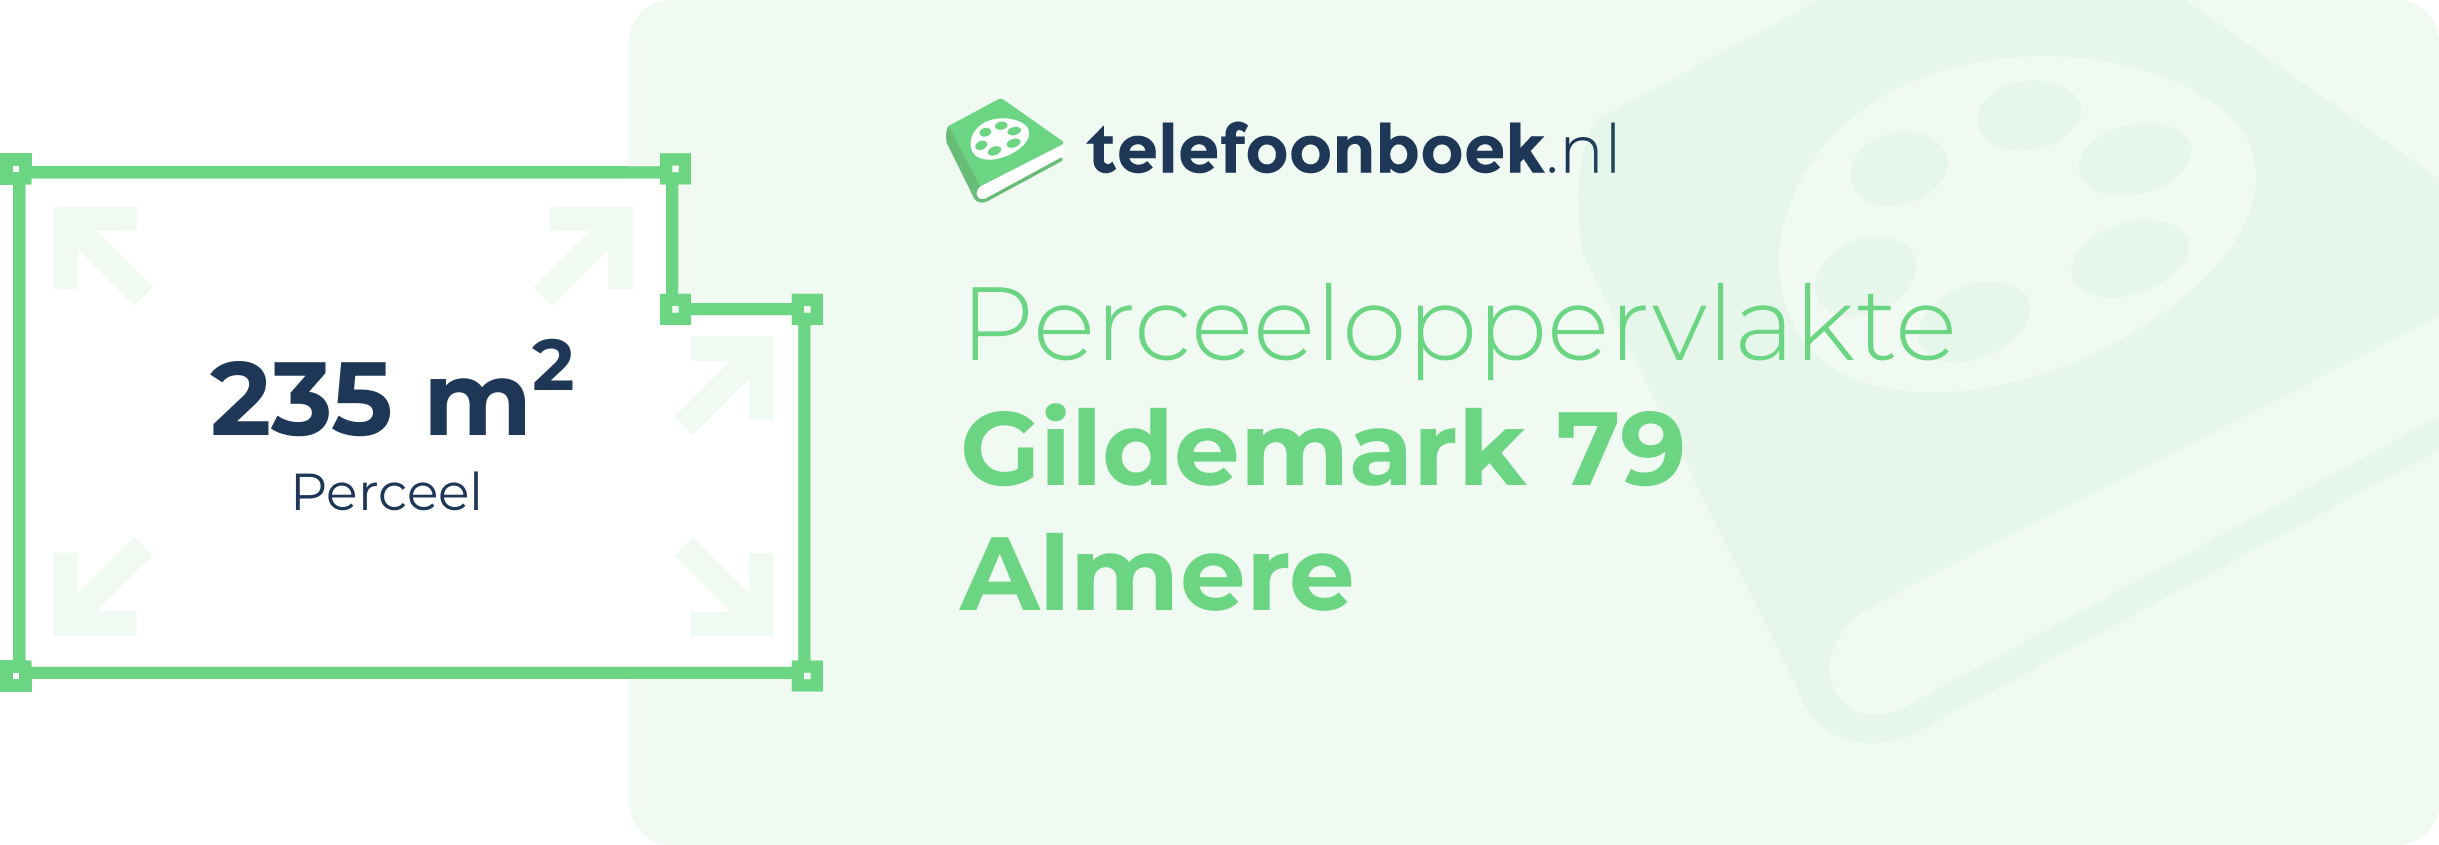 Perceeloppervlakte Gildemark 79 Almere